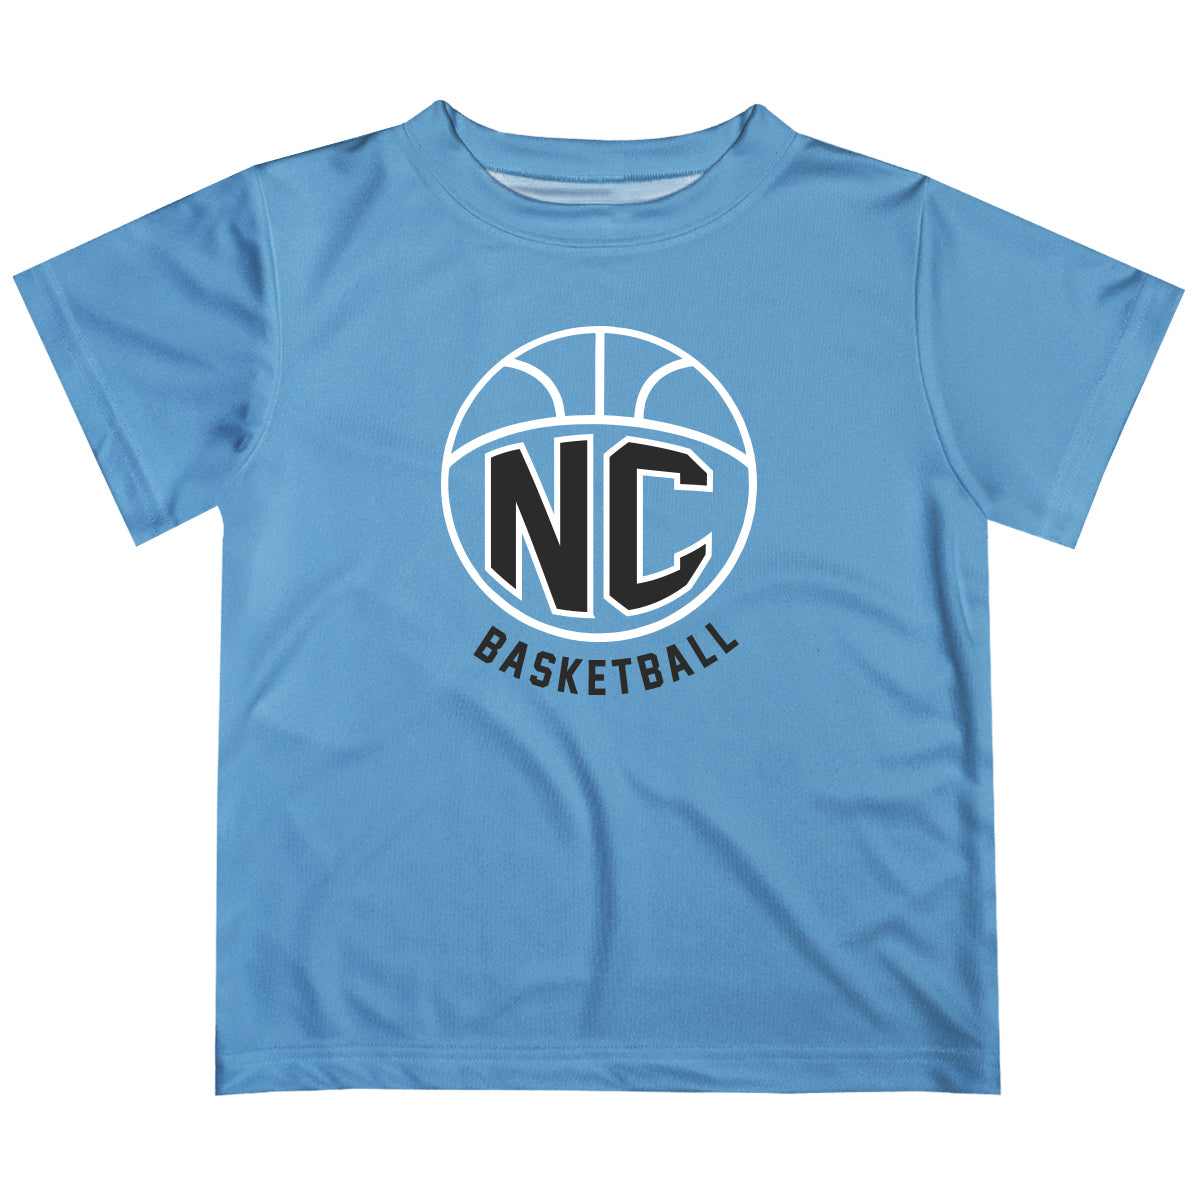 North Carolina Basketball Light Blue Short Sleeve Tee Shirt